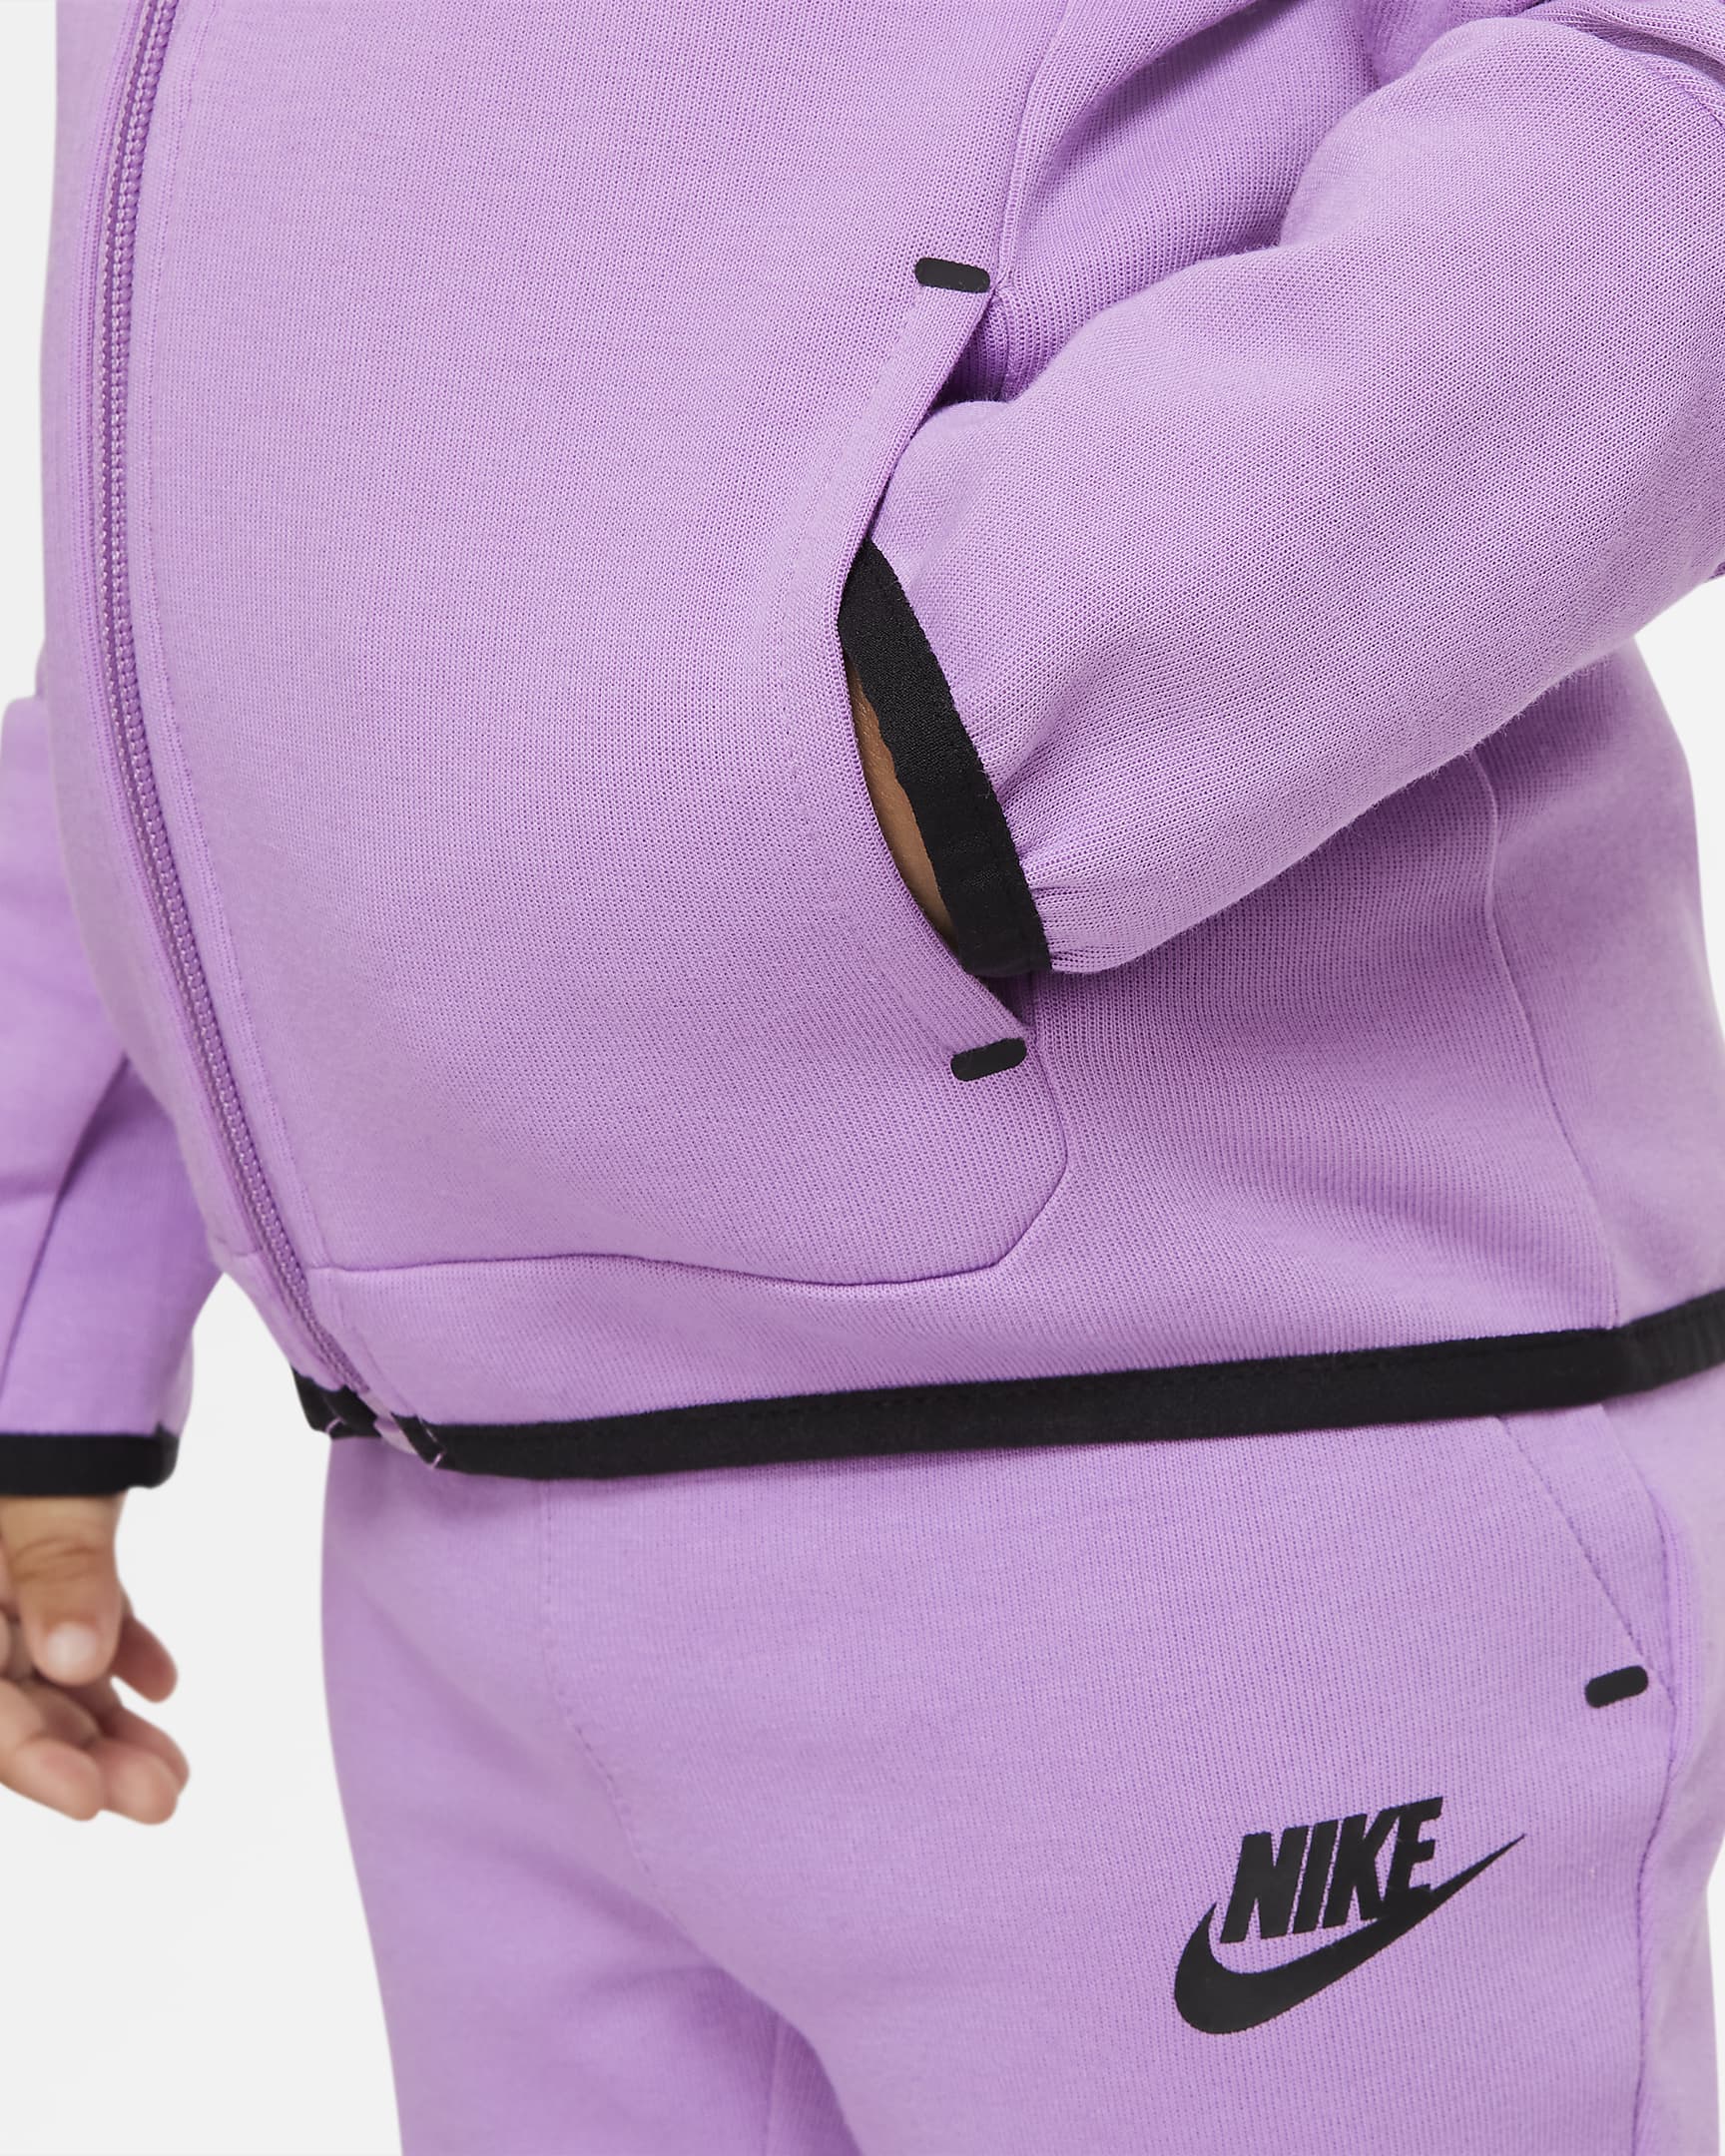 Nike Sportswear Tech Fleece Baby (12-24M) Full-Zip Hoodie and Pants Set ...